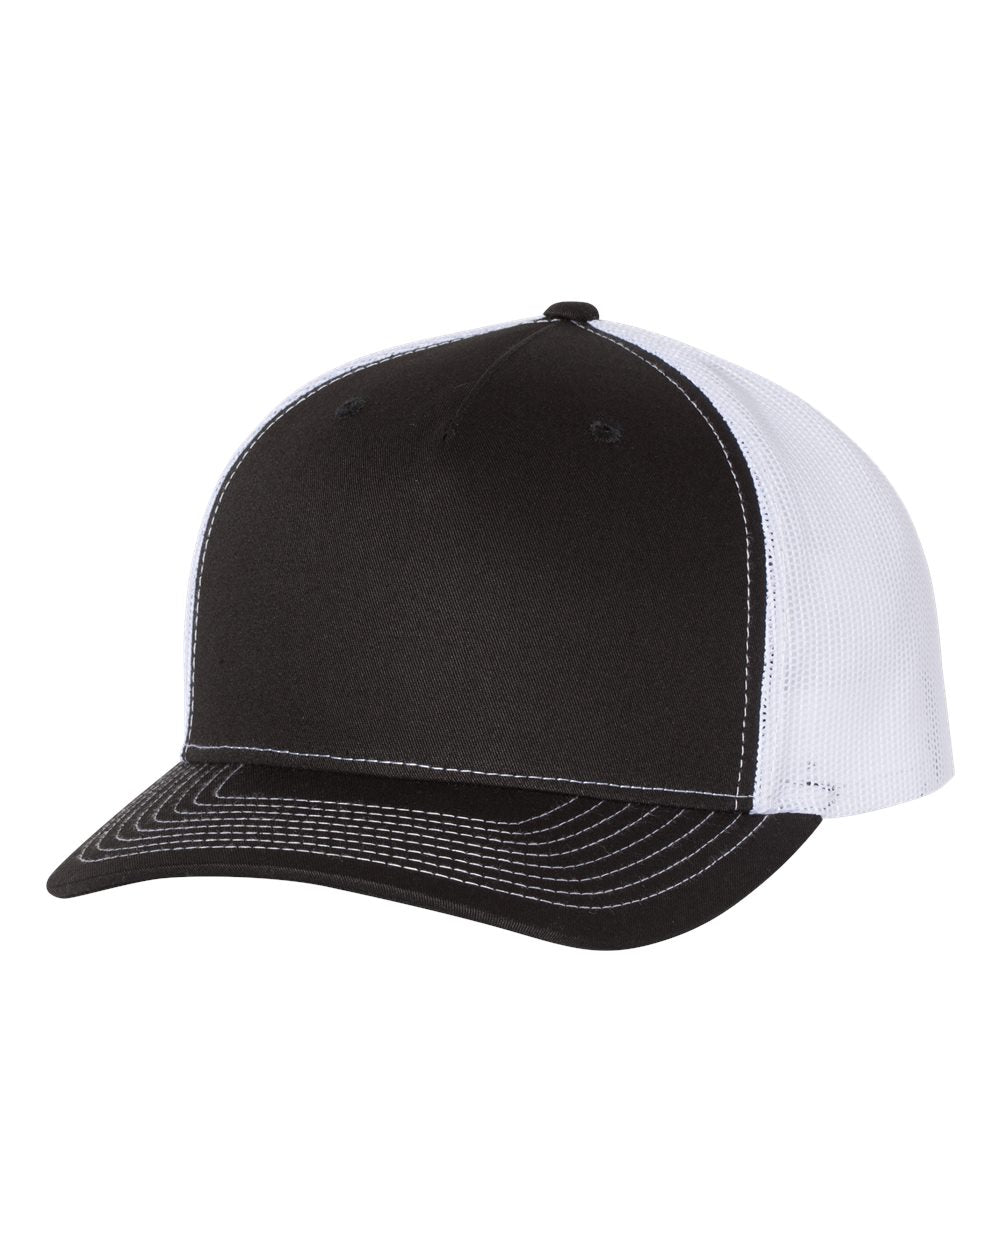 richardson cap black white